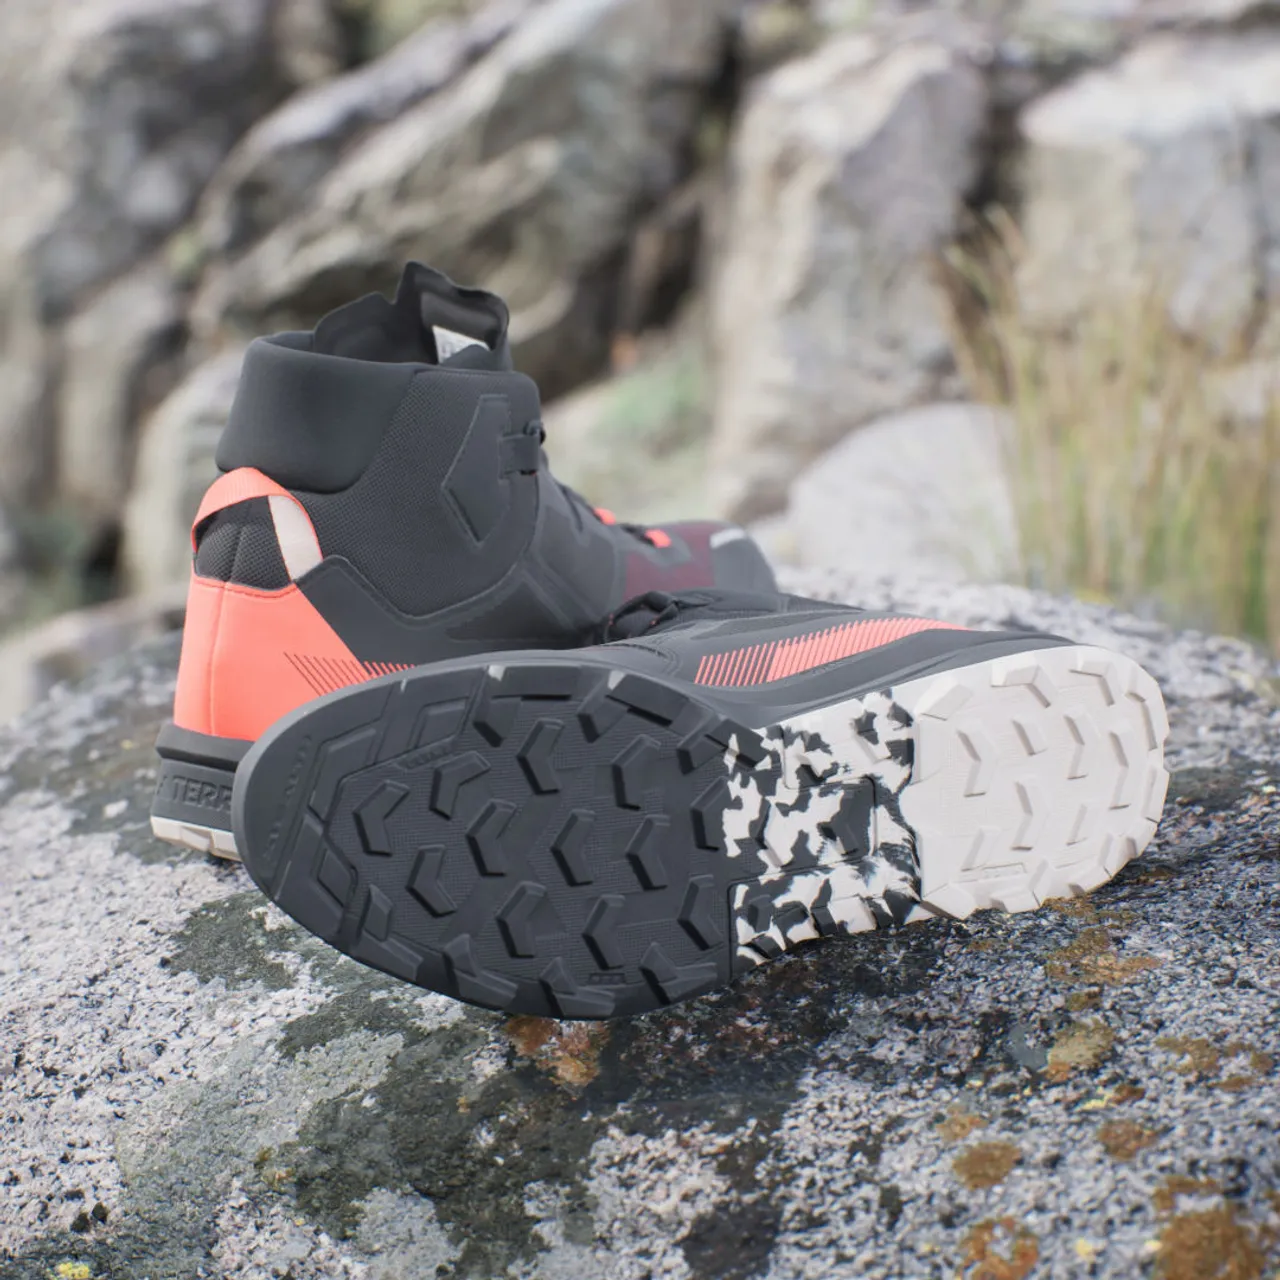 Terrex Skychaser Tech GORE-TEX Hiking Shoes